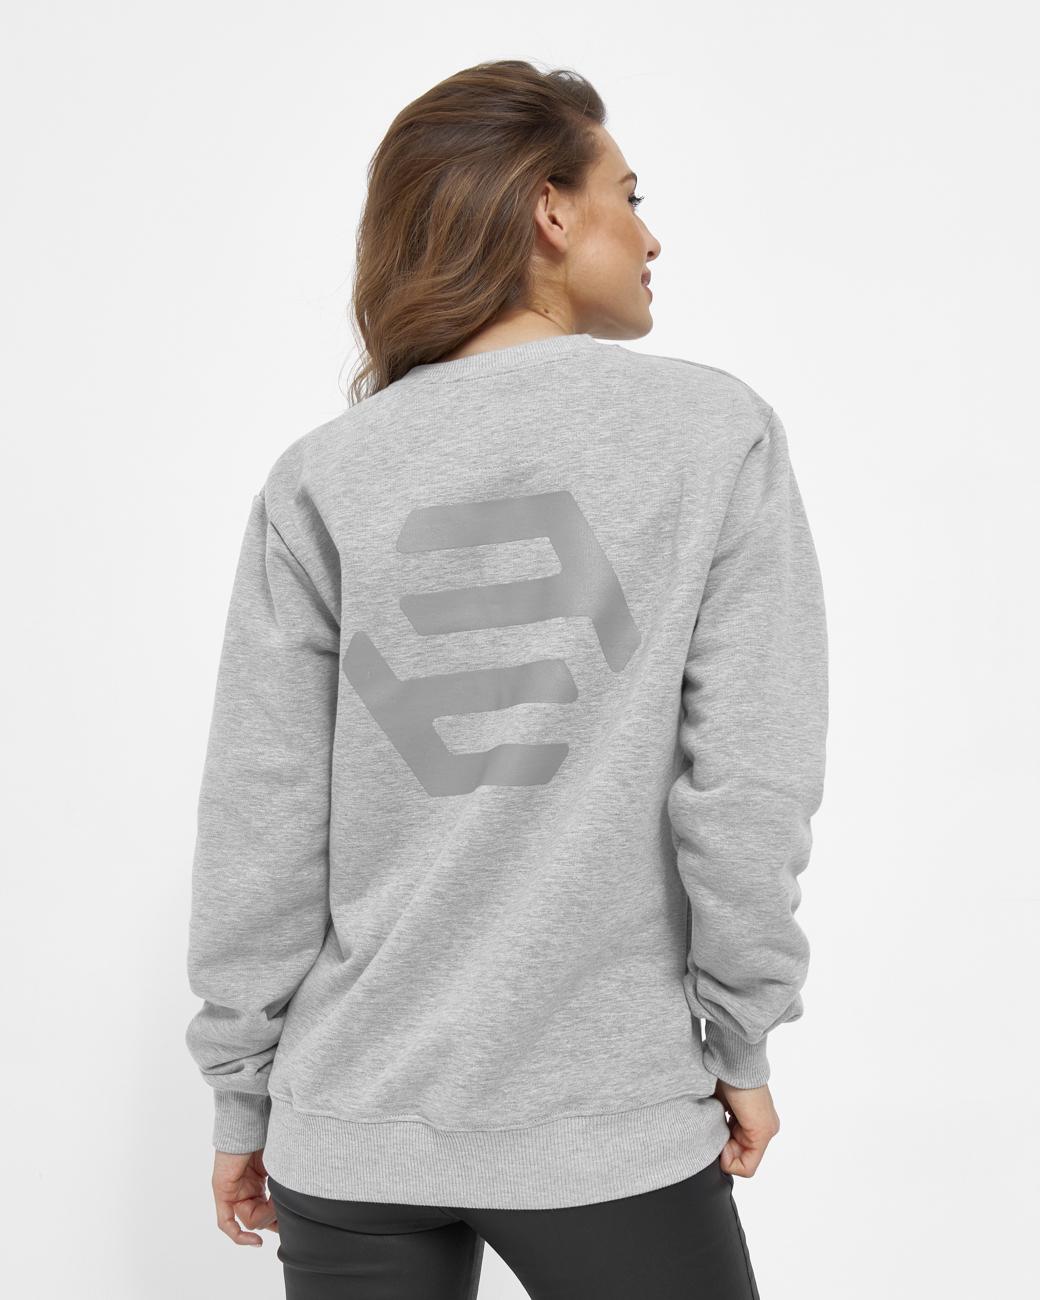 Sweatshirt SOFTFLIX grey XL